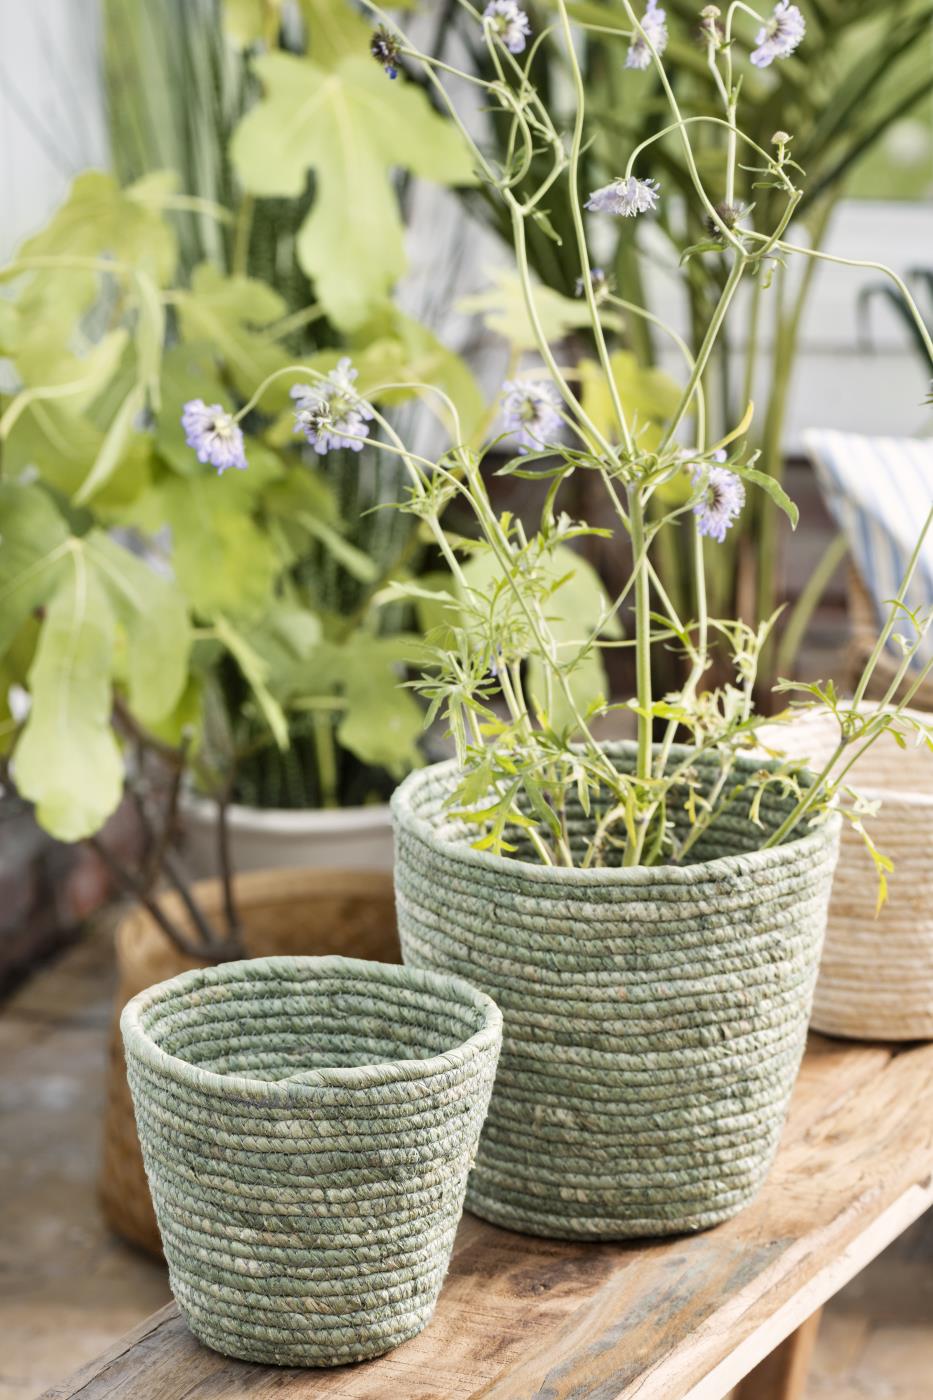 Plant Pot storage basket - Green - THE BRISTOL ARTISAN